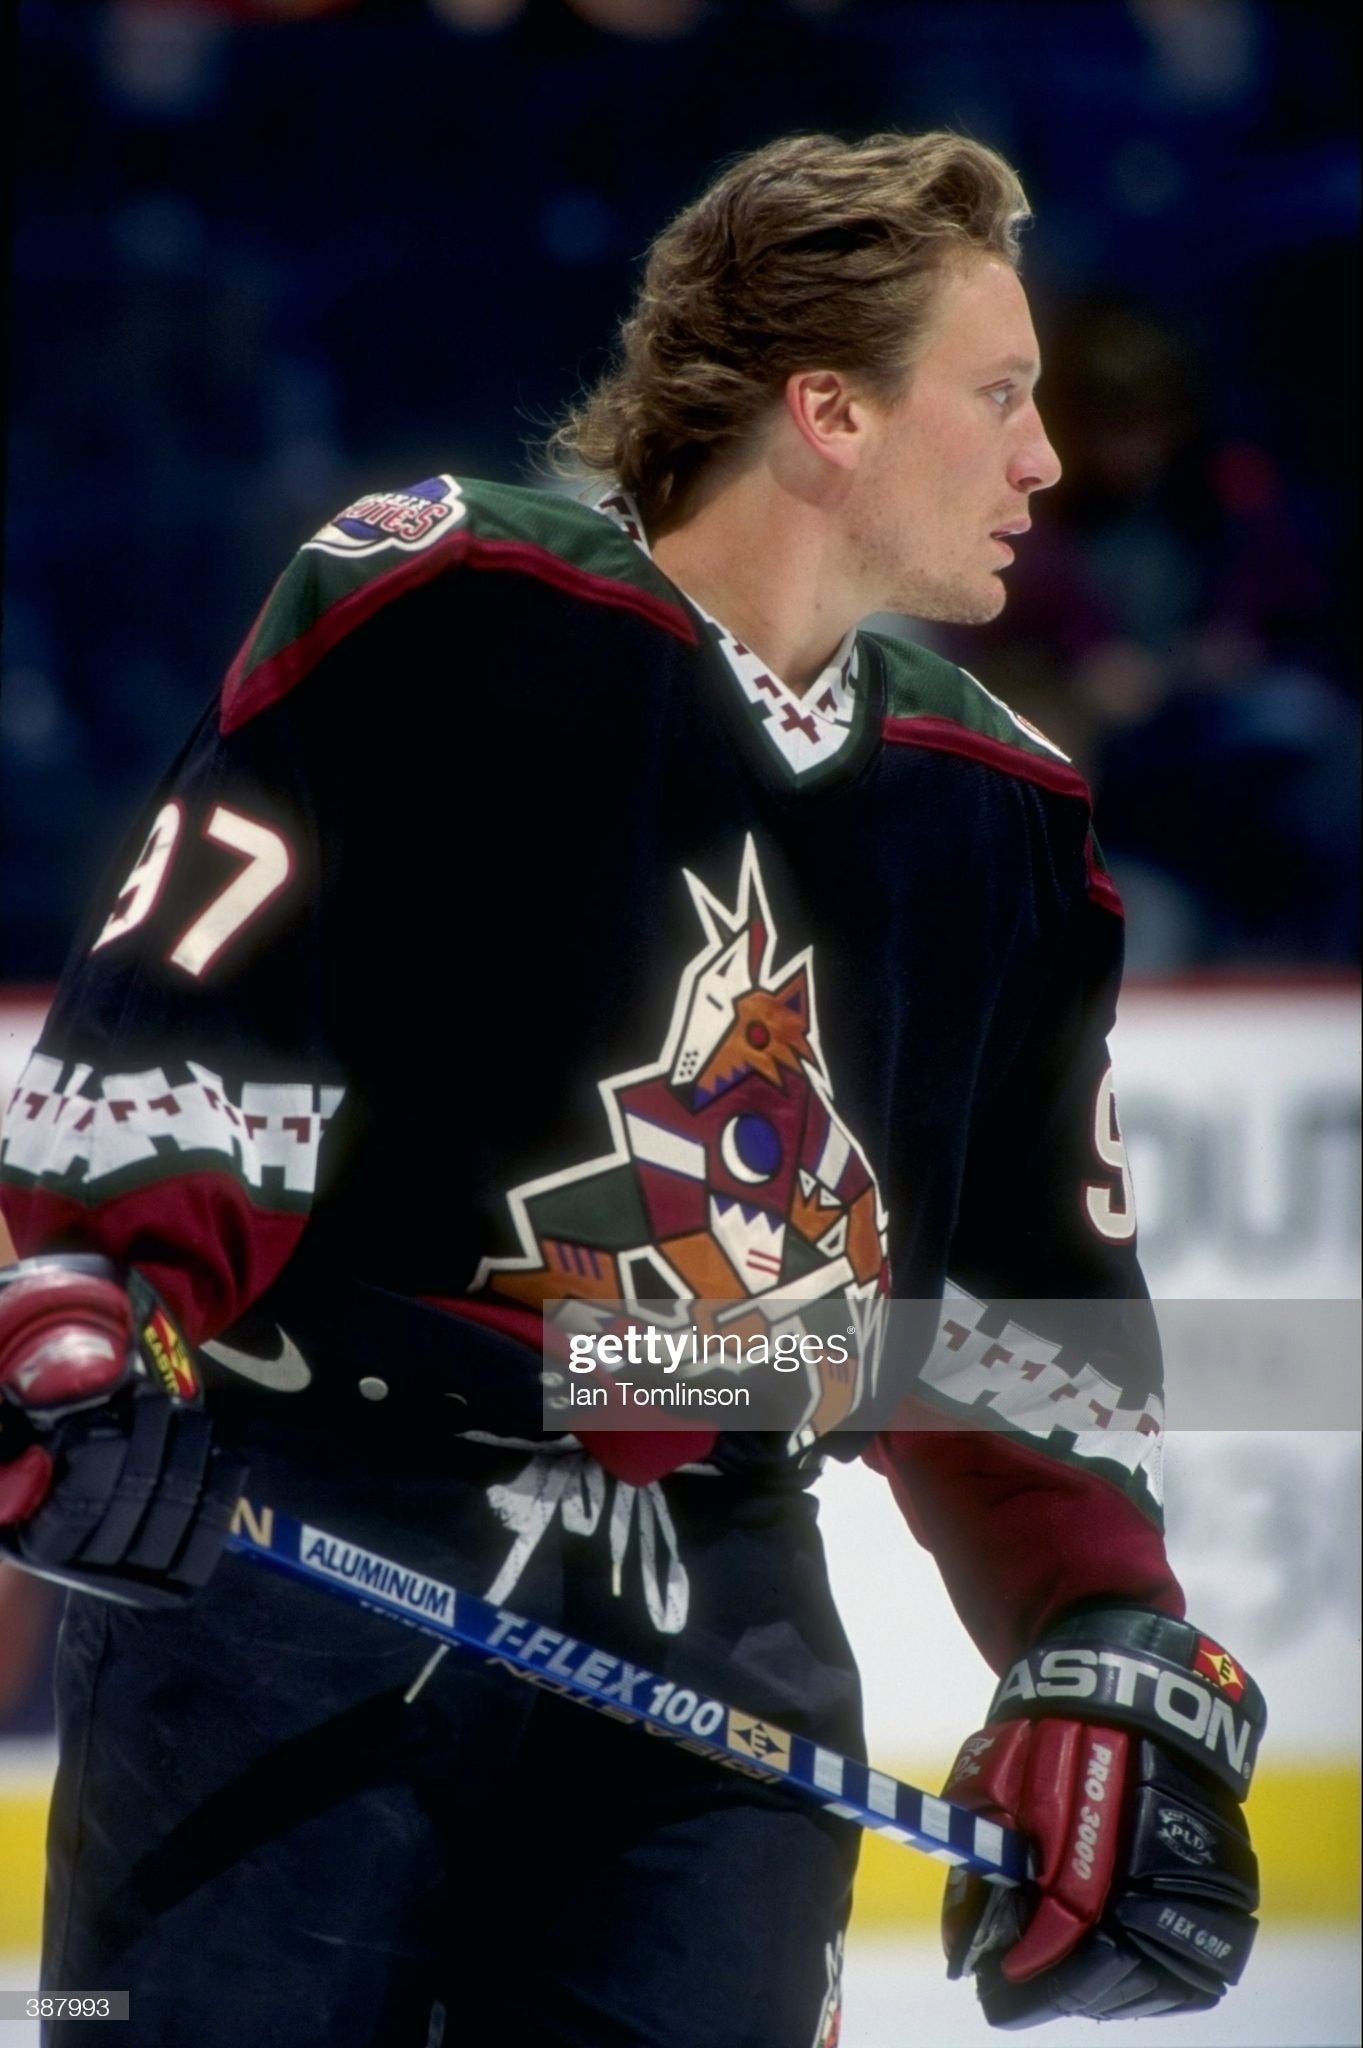 Phoenix Coyotes 1999-2001 Jeremy Roenick NHL Hockey Jersey (Large)